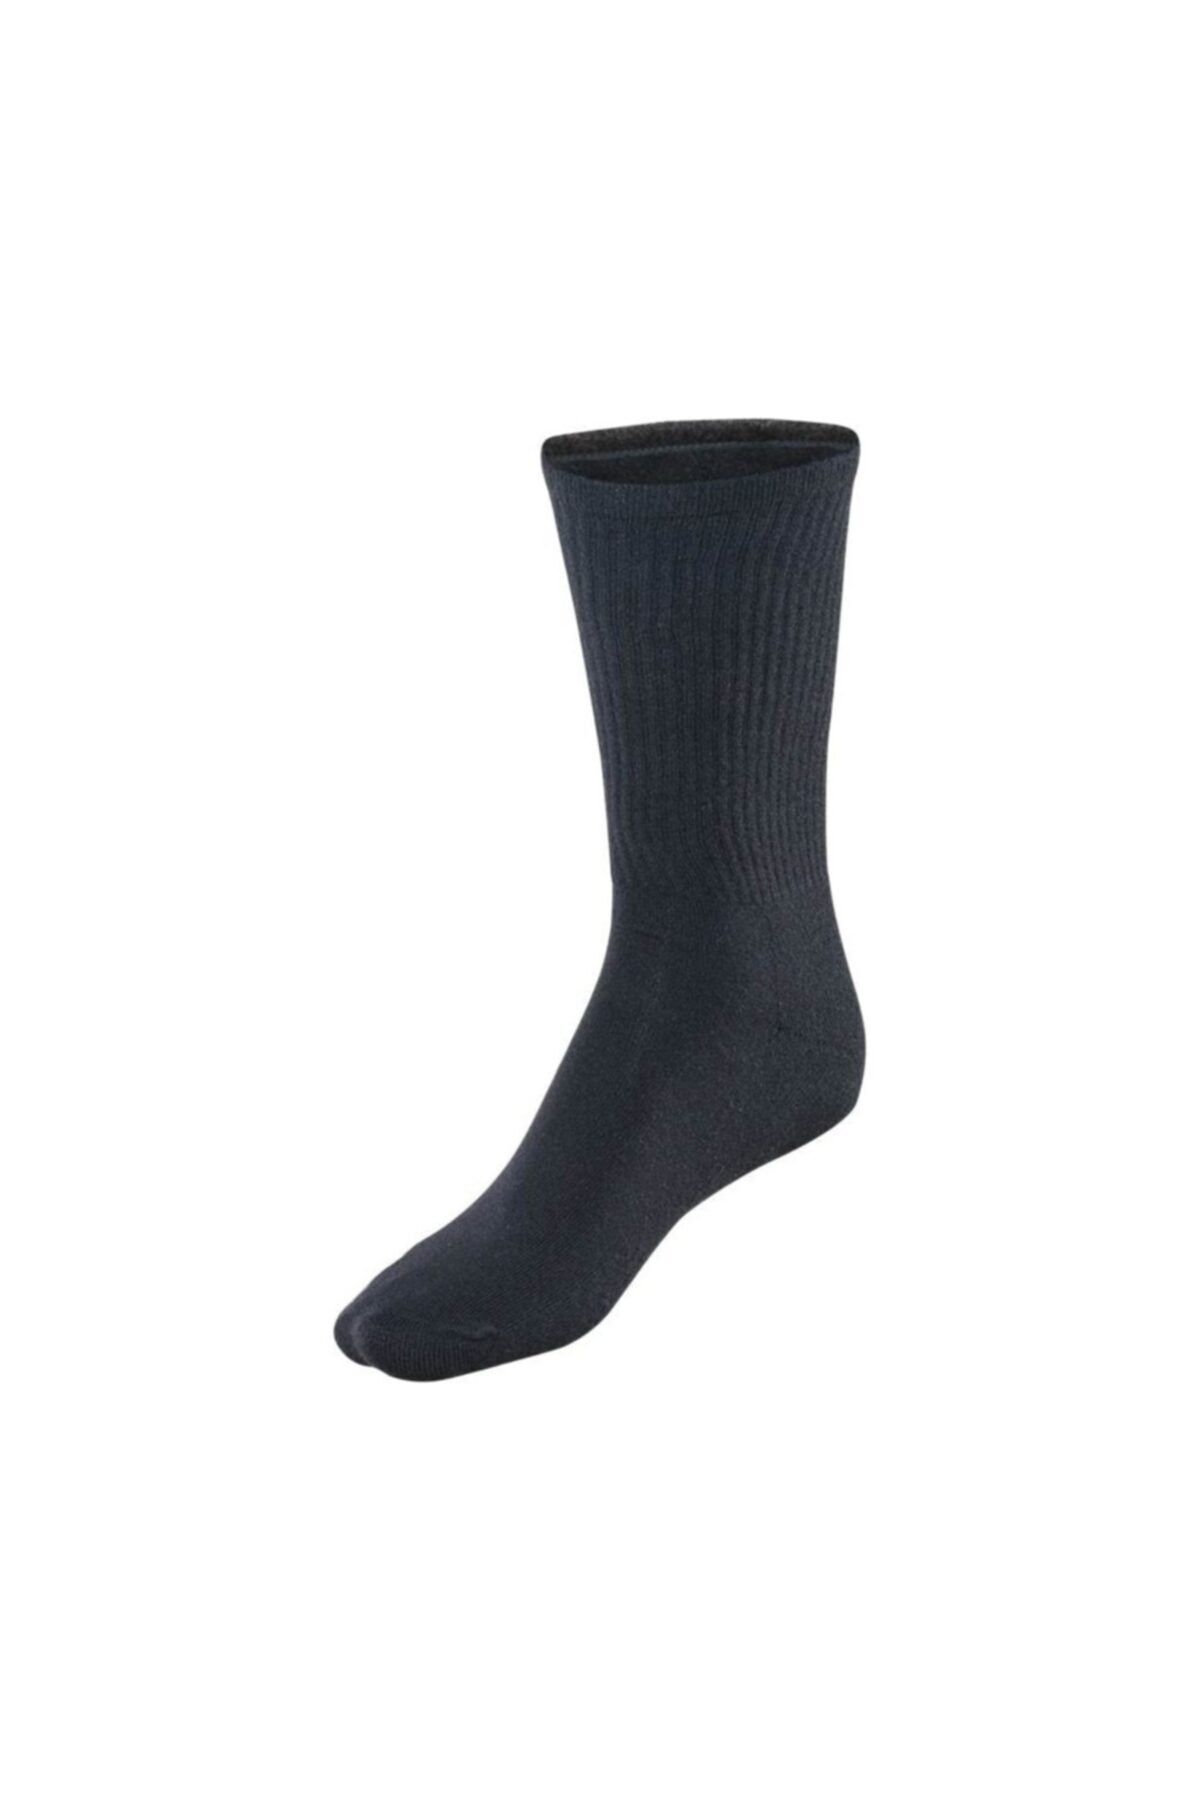 Blackspade Unisex Thermal Çorap Taban Çift Katmanlı Tek Adet